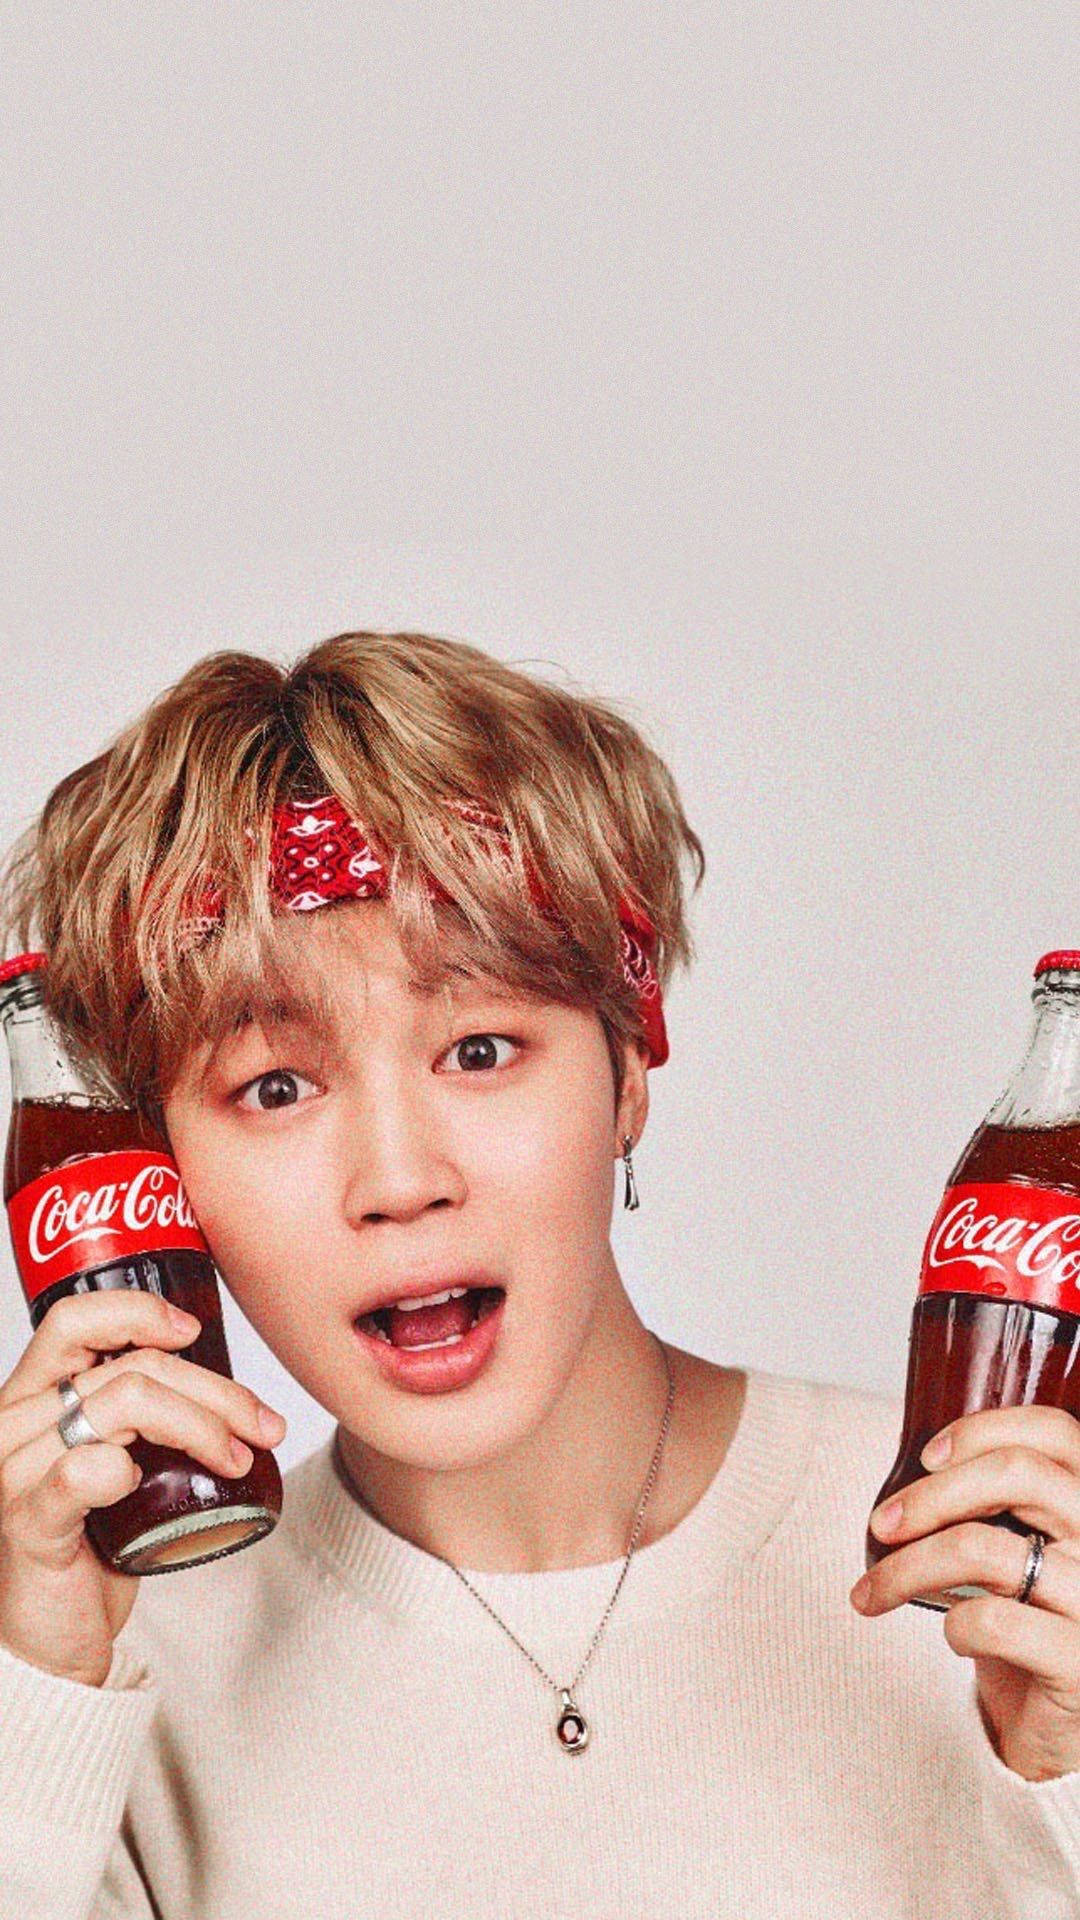 Bts Jimin For Coca-cola Background